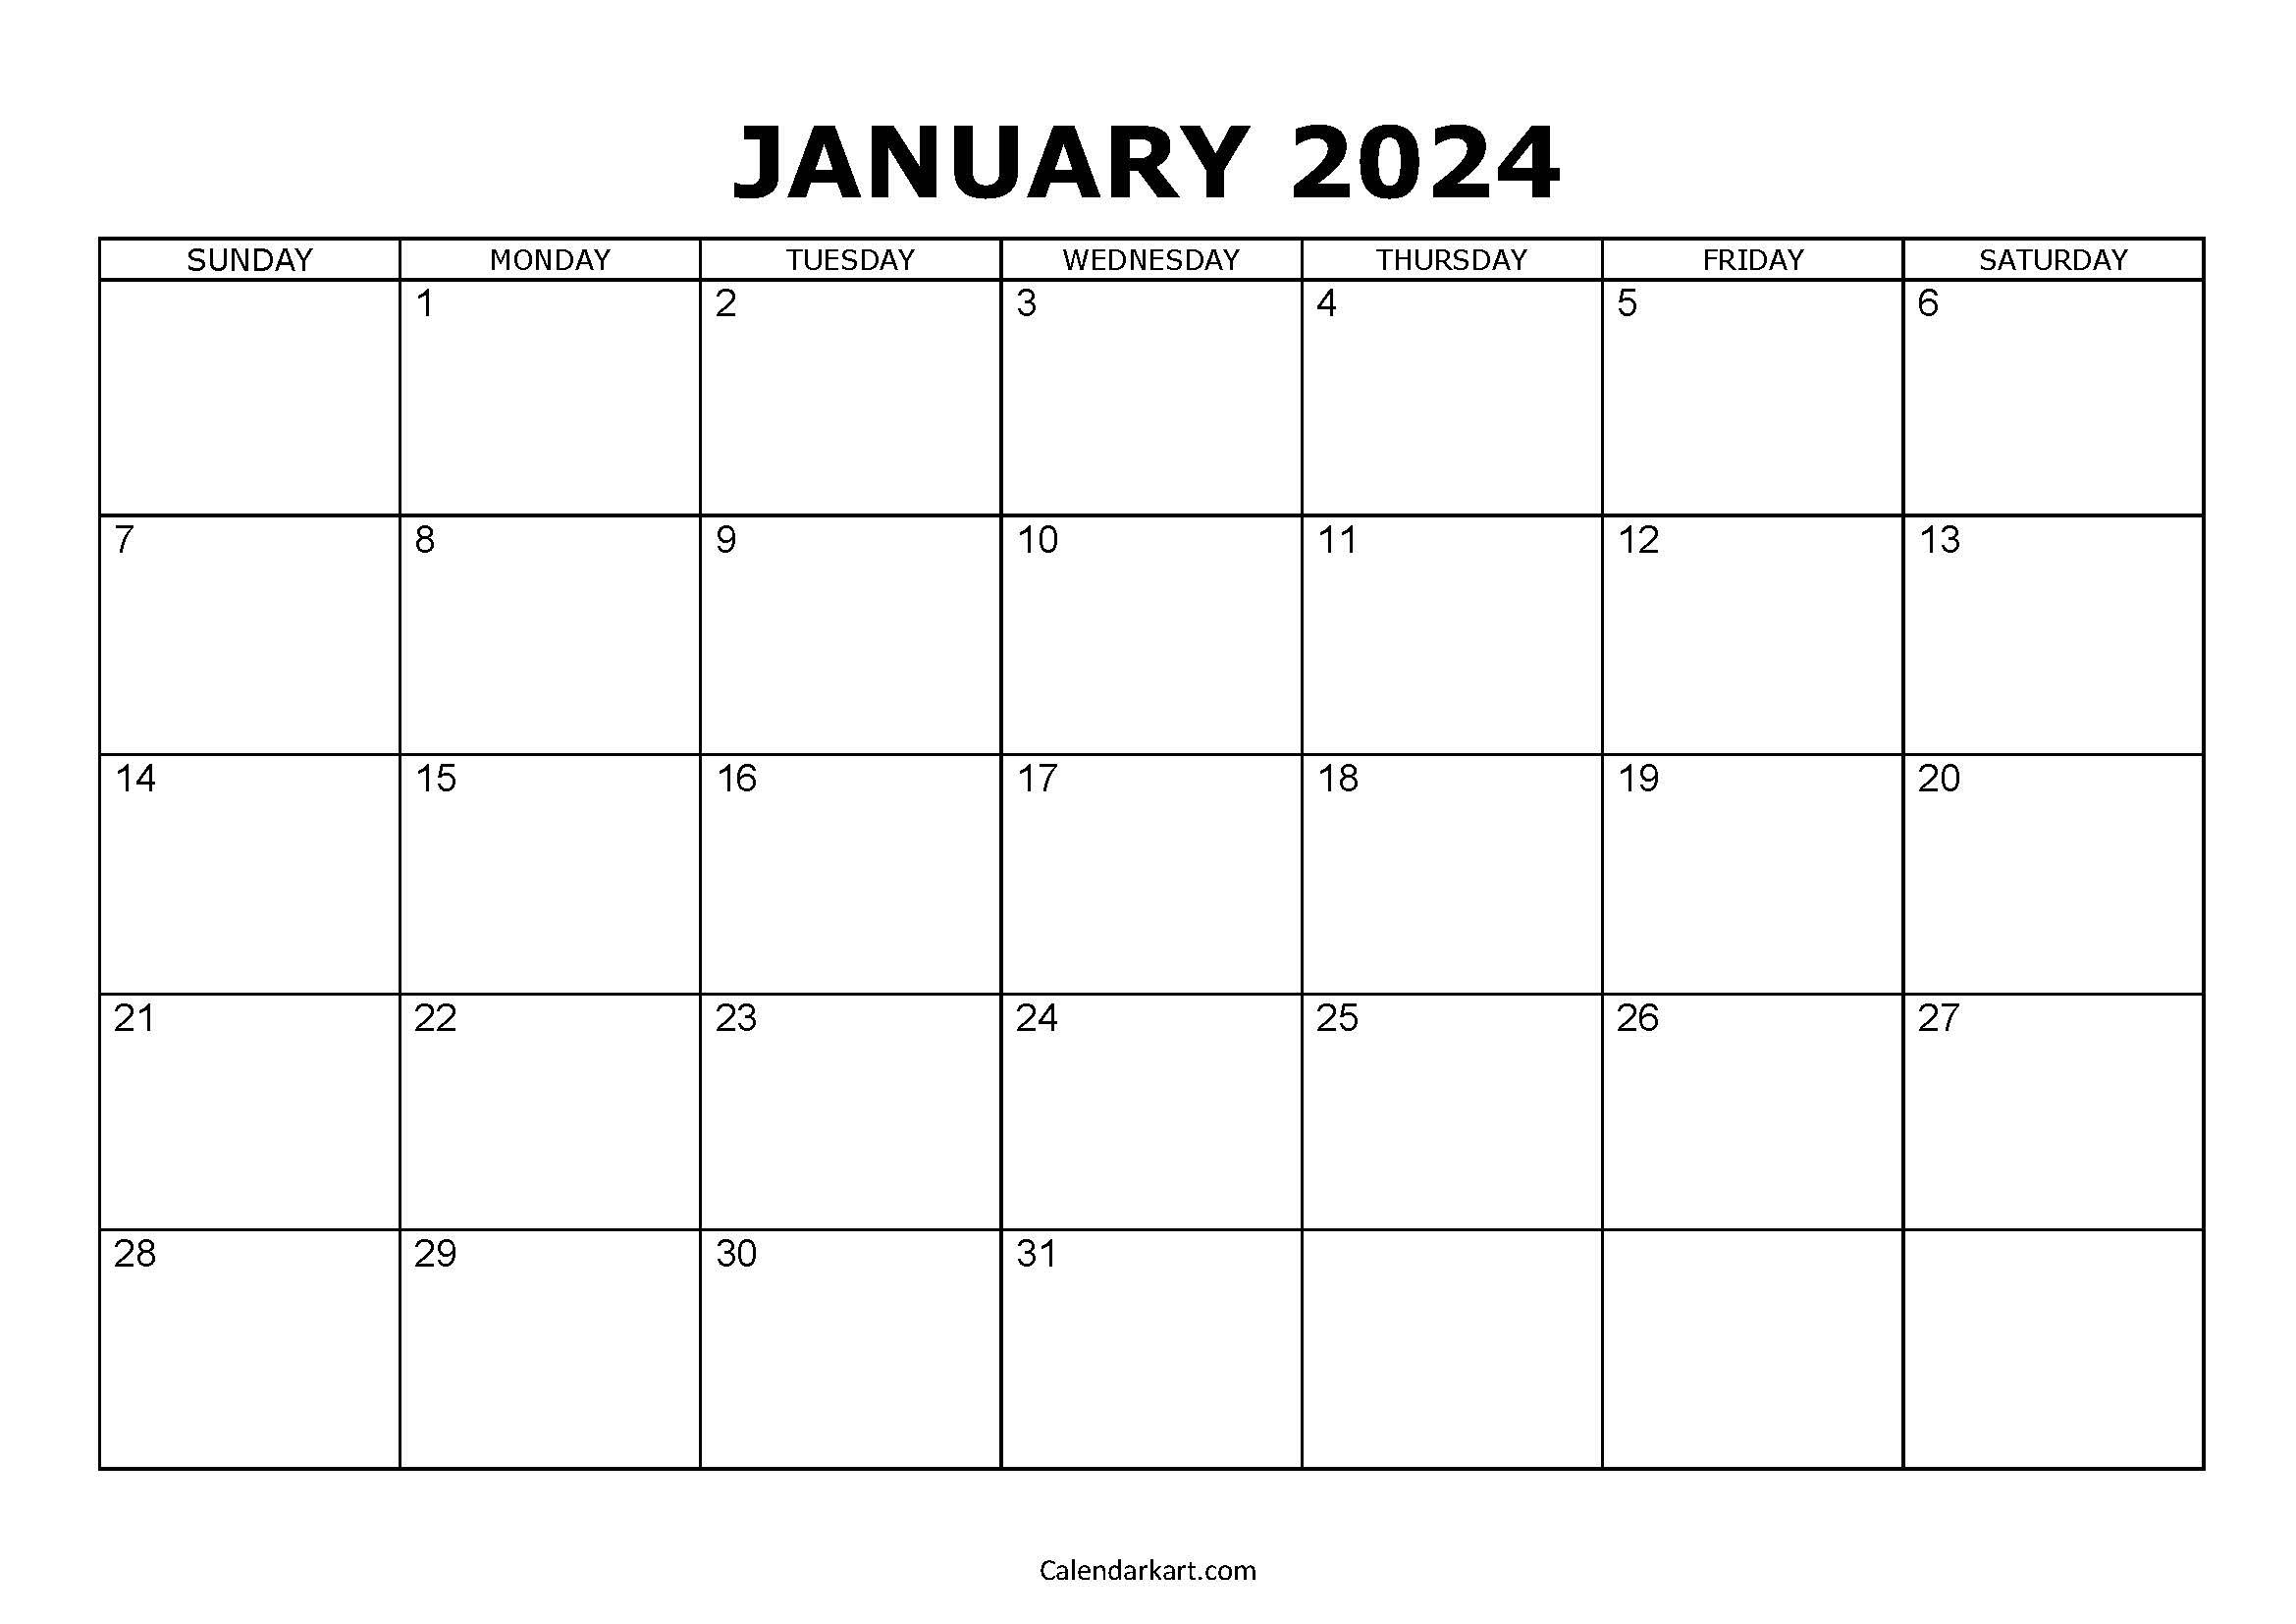 Free Printable January 2024 Calendars - Calendarkart within Free Printable Calendar 2024 No Ads